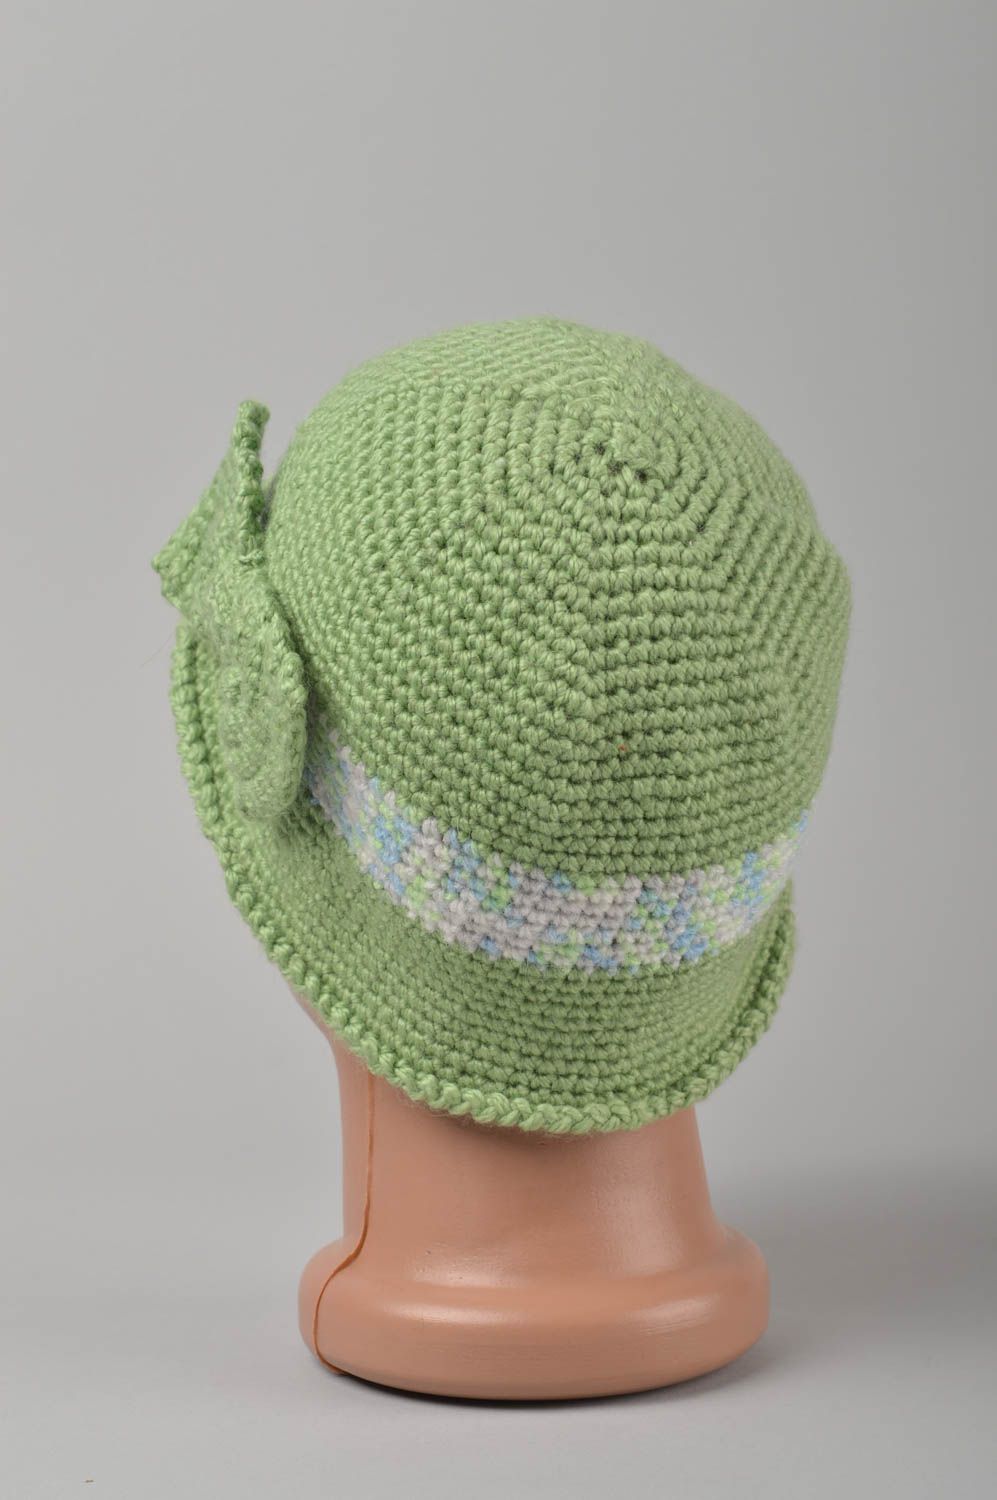 Handmade hat designer hat green hat with bow crocheted hat gift ideas warm hat photo 5